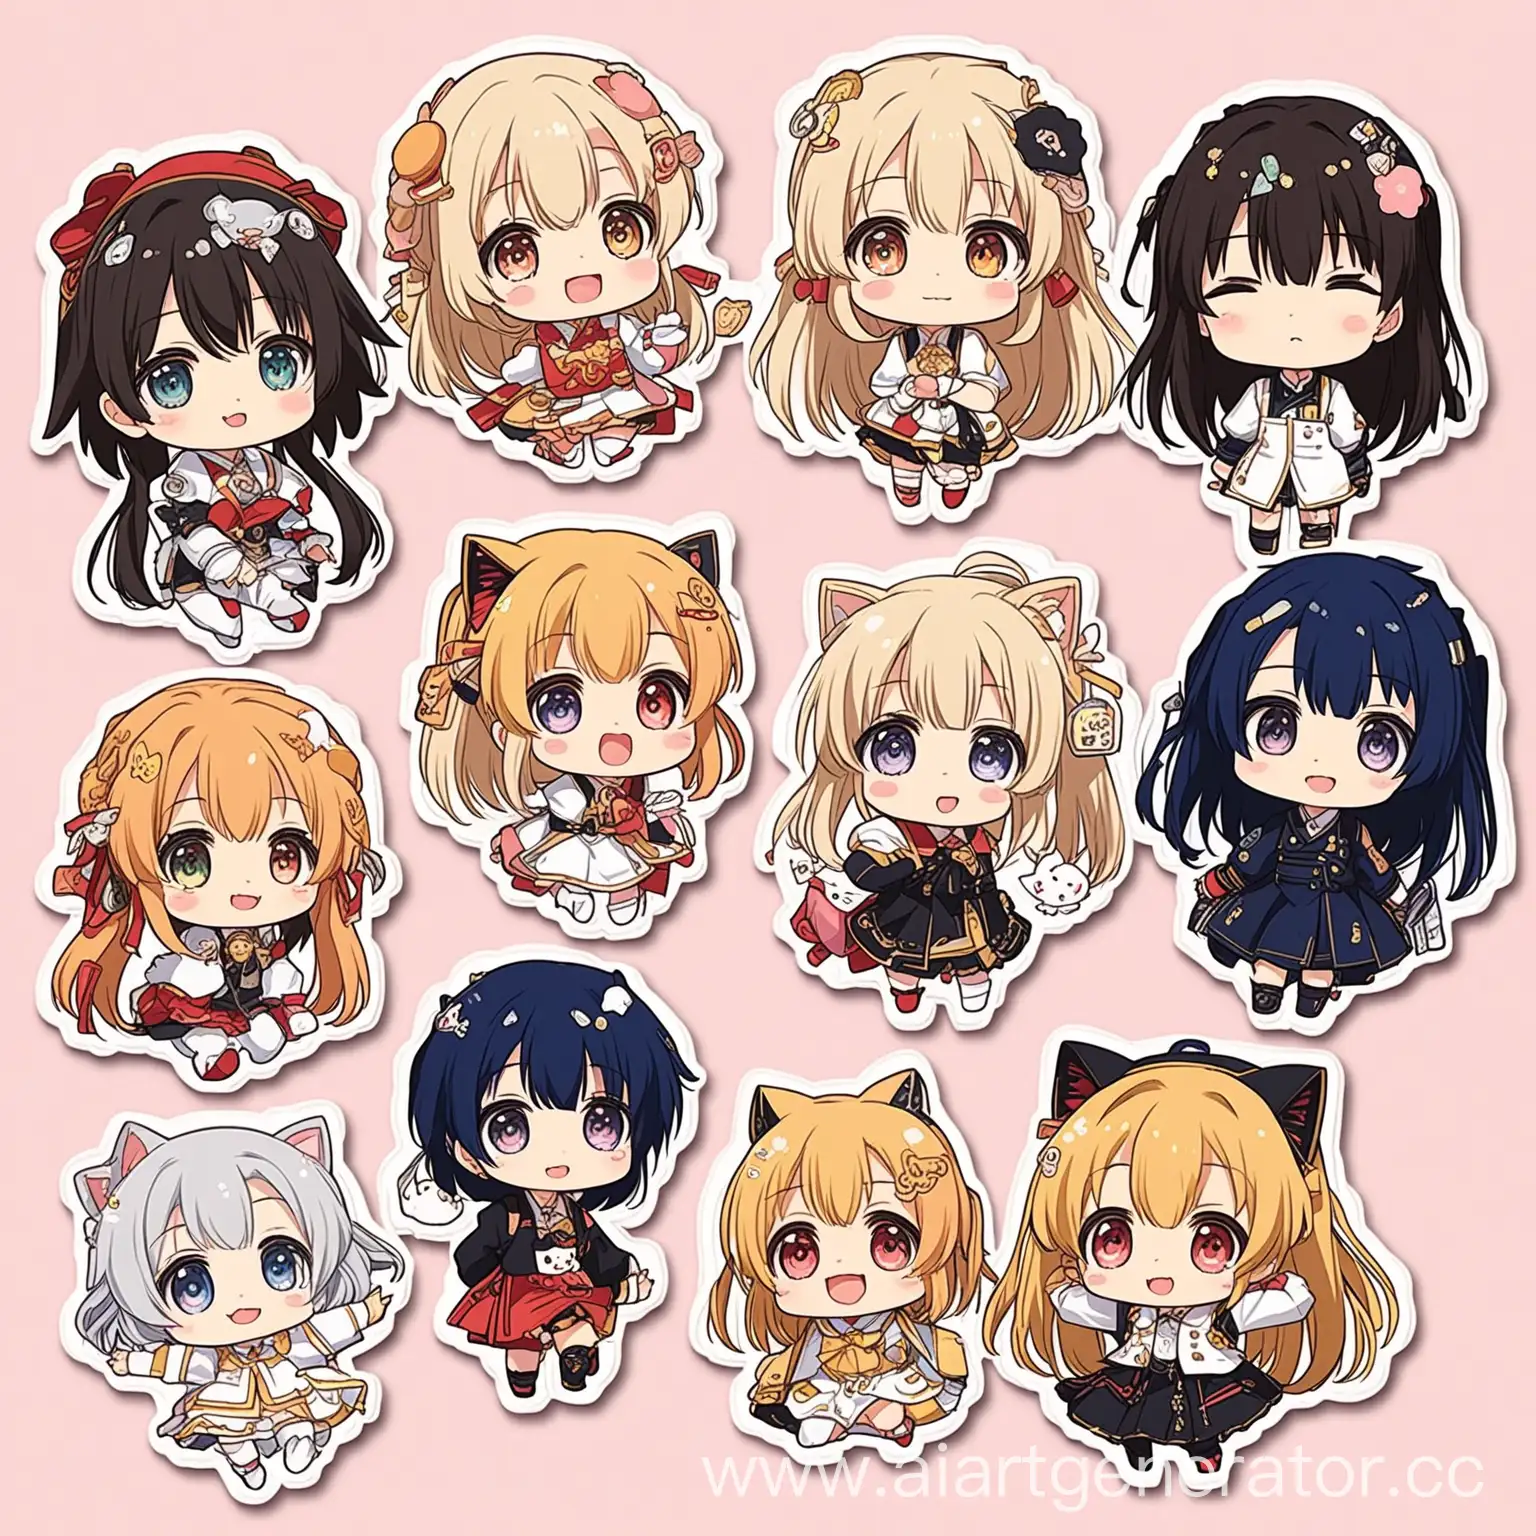 Adorable-Anime-Stickers-Kawaii-Characters-and-Playful-Designs